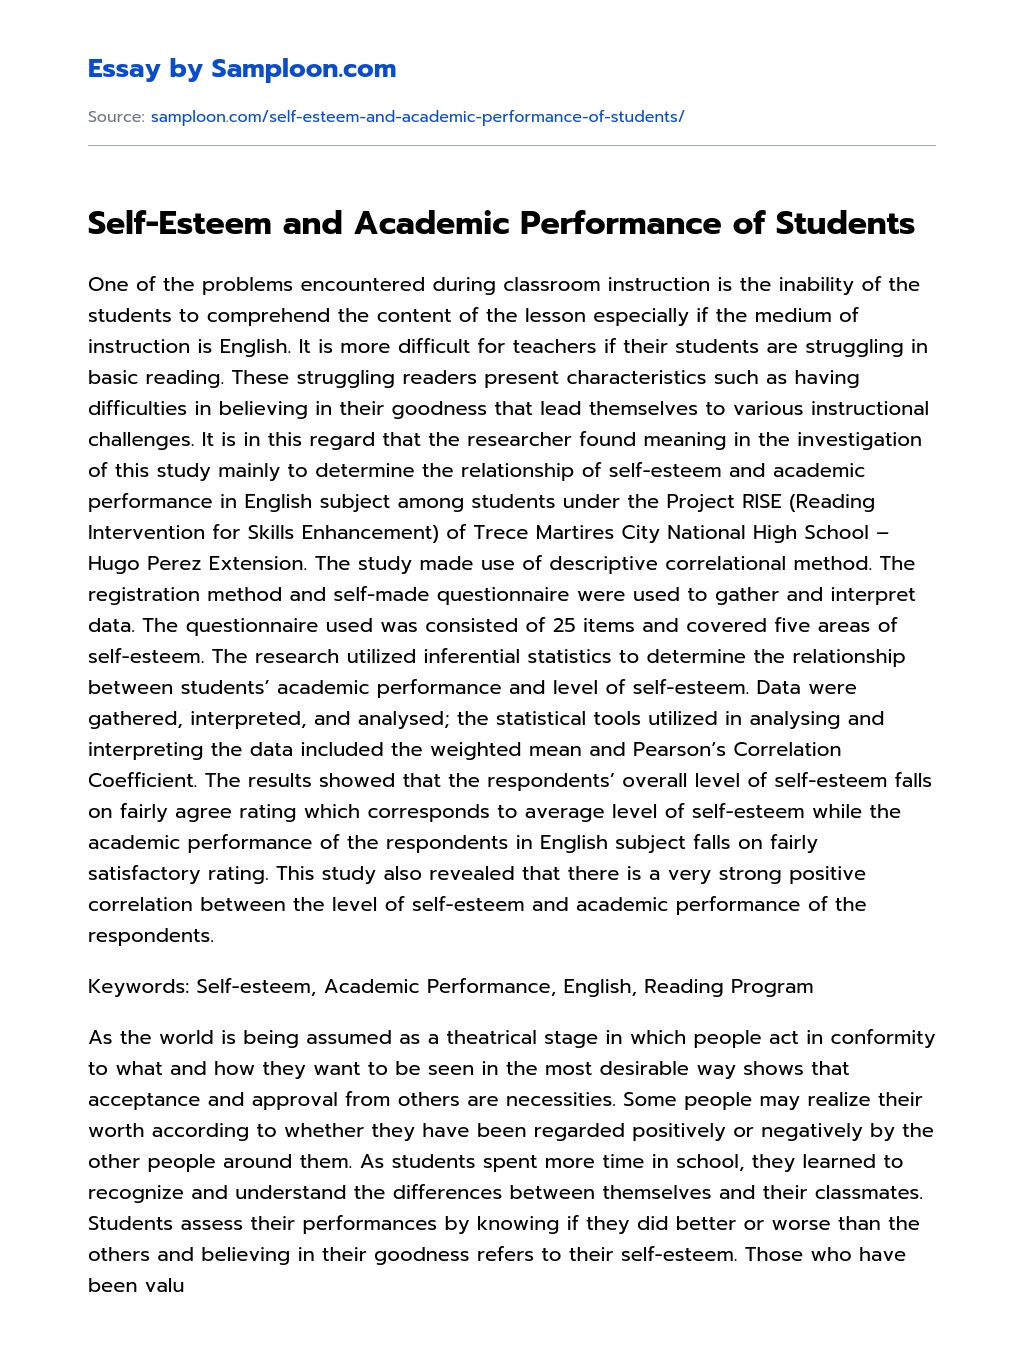 Self-Esteem and Academic Performance of Students essay